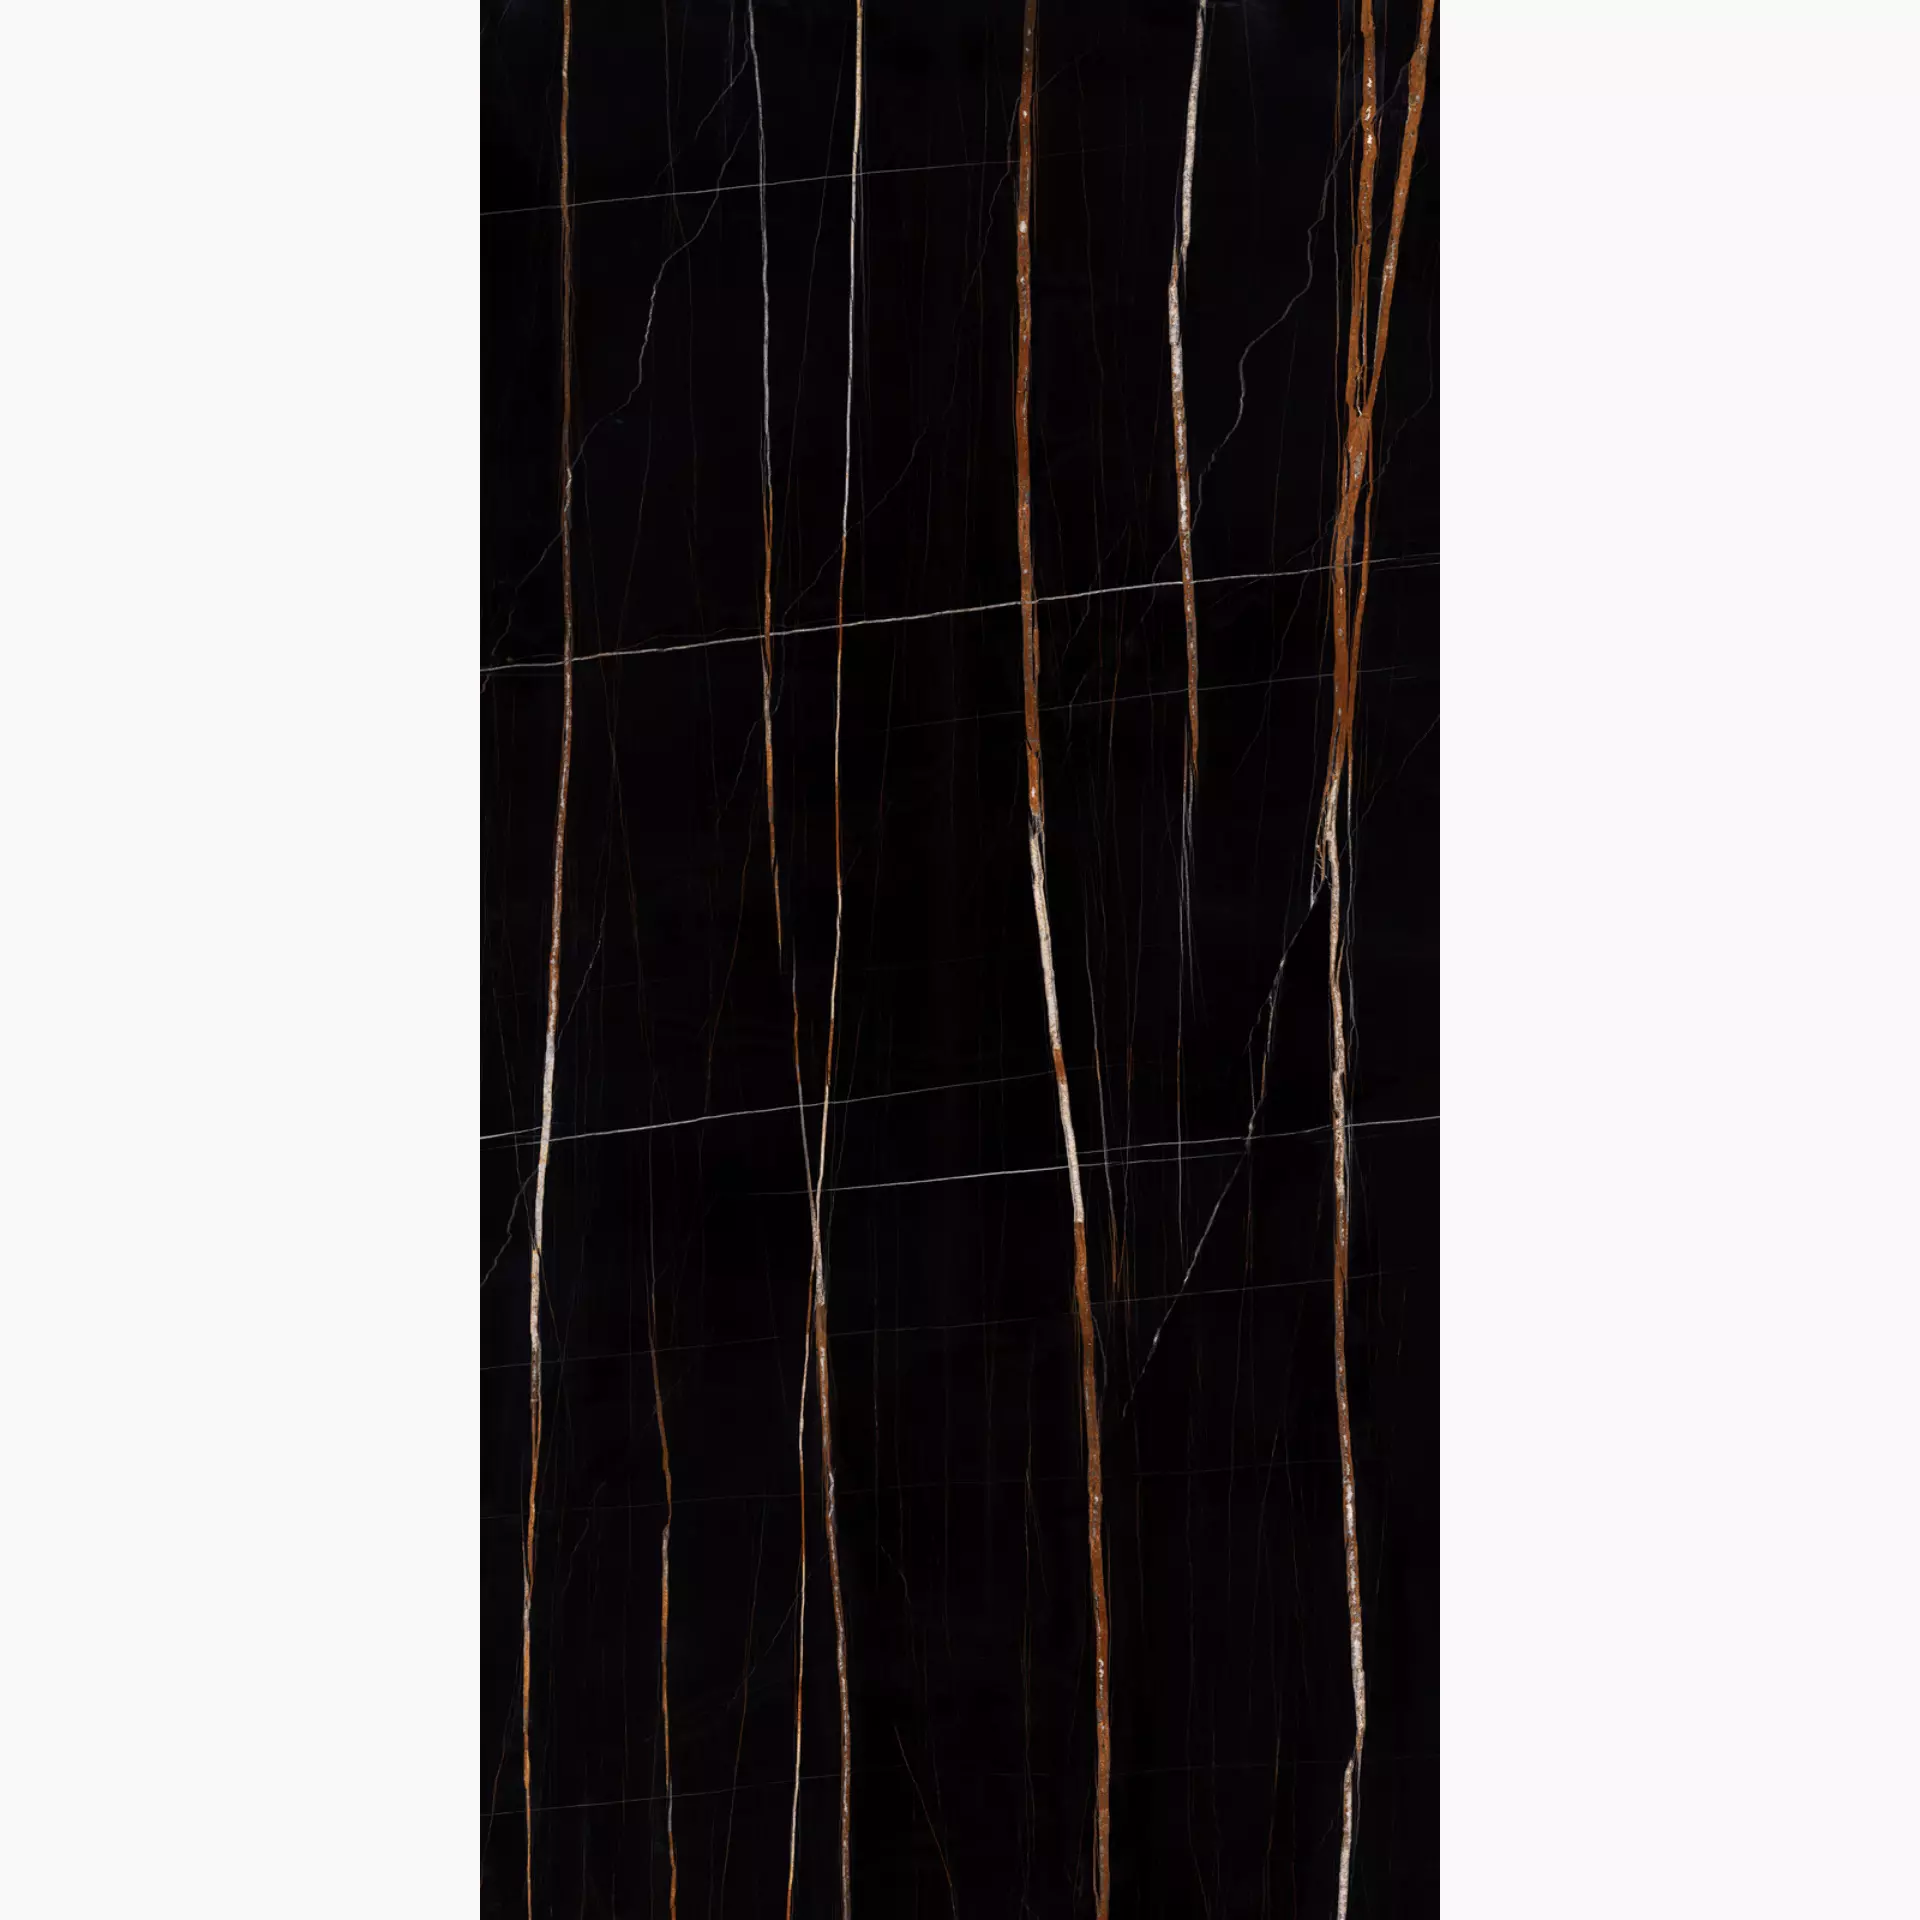 Marazzi Grande Marble Look Sahara Noir Lux Sahara Noir M8ZJ glaenzend 160x320cm rektifiziert 6mm